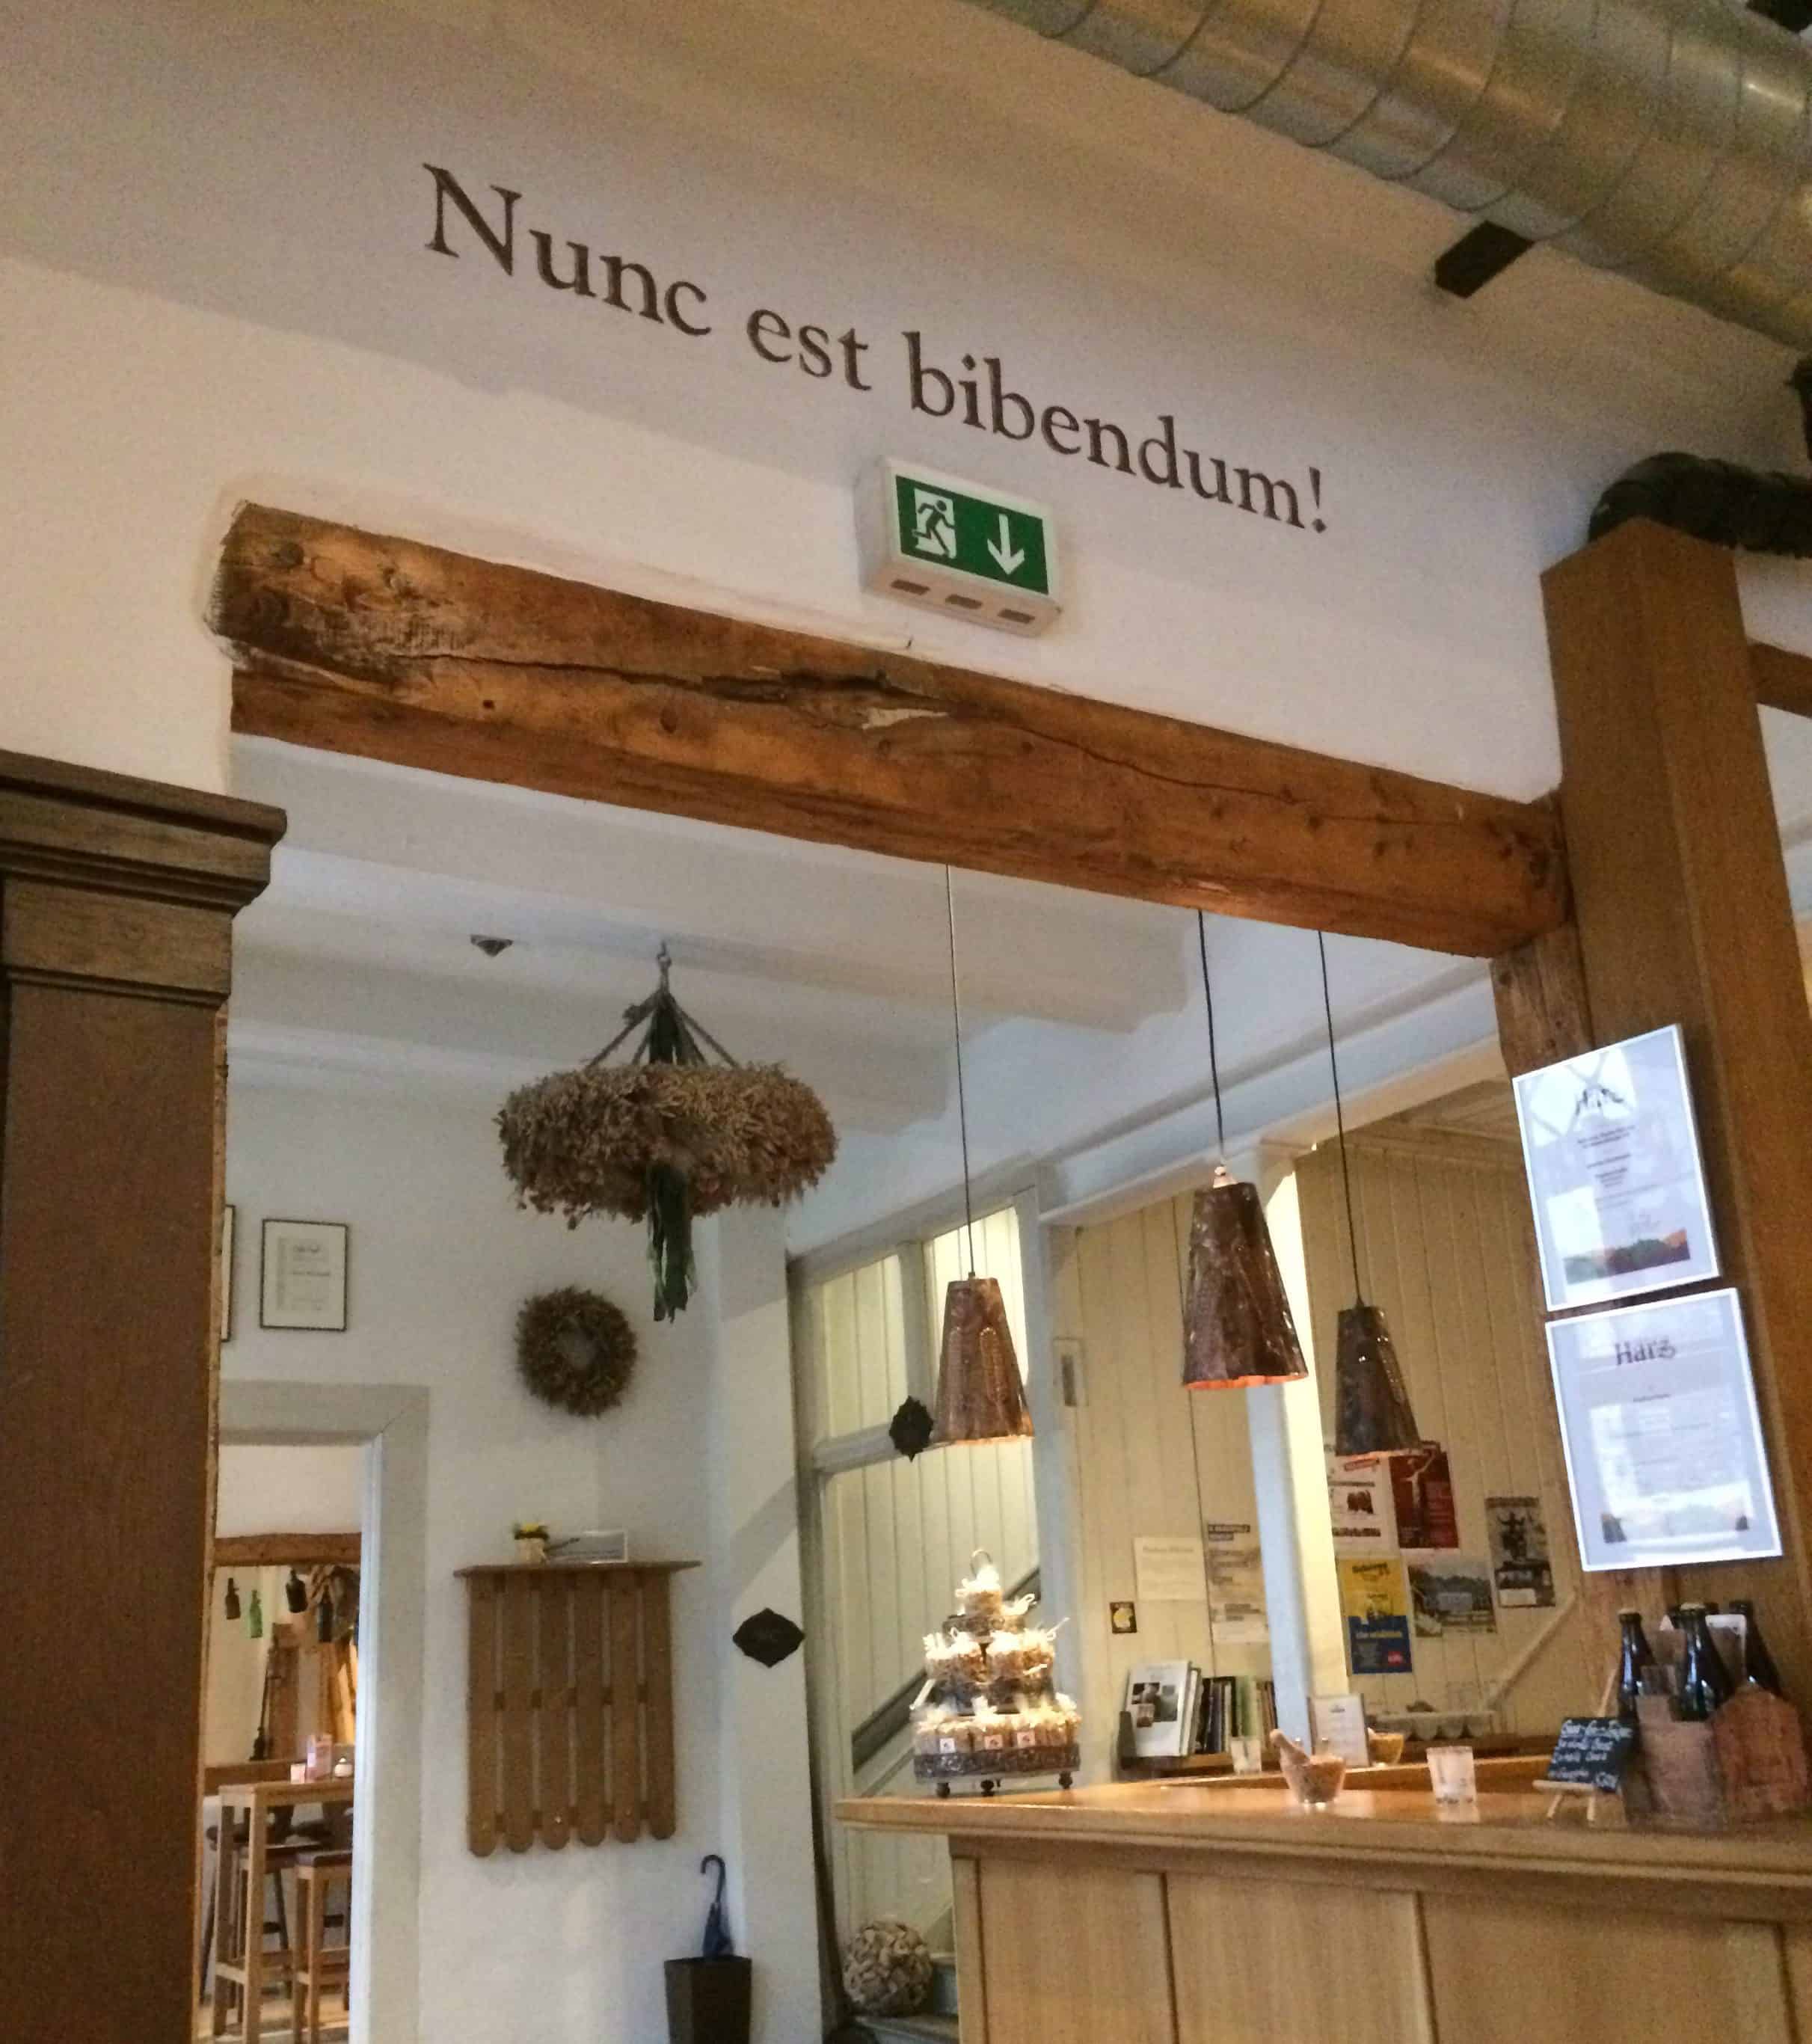 Brauhaus motto: Nunc est bibendum